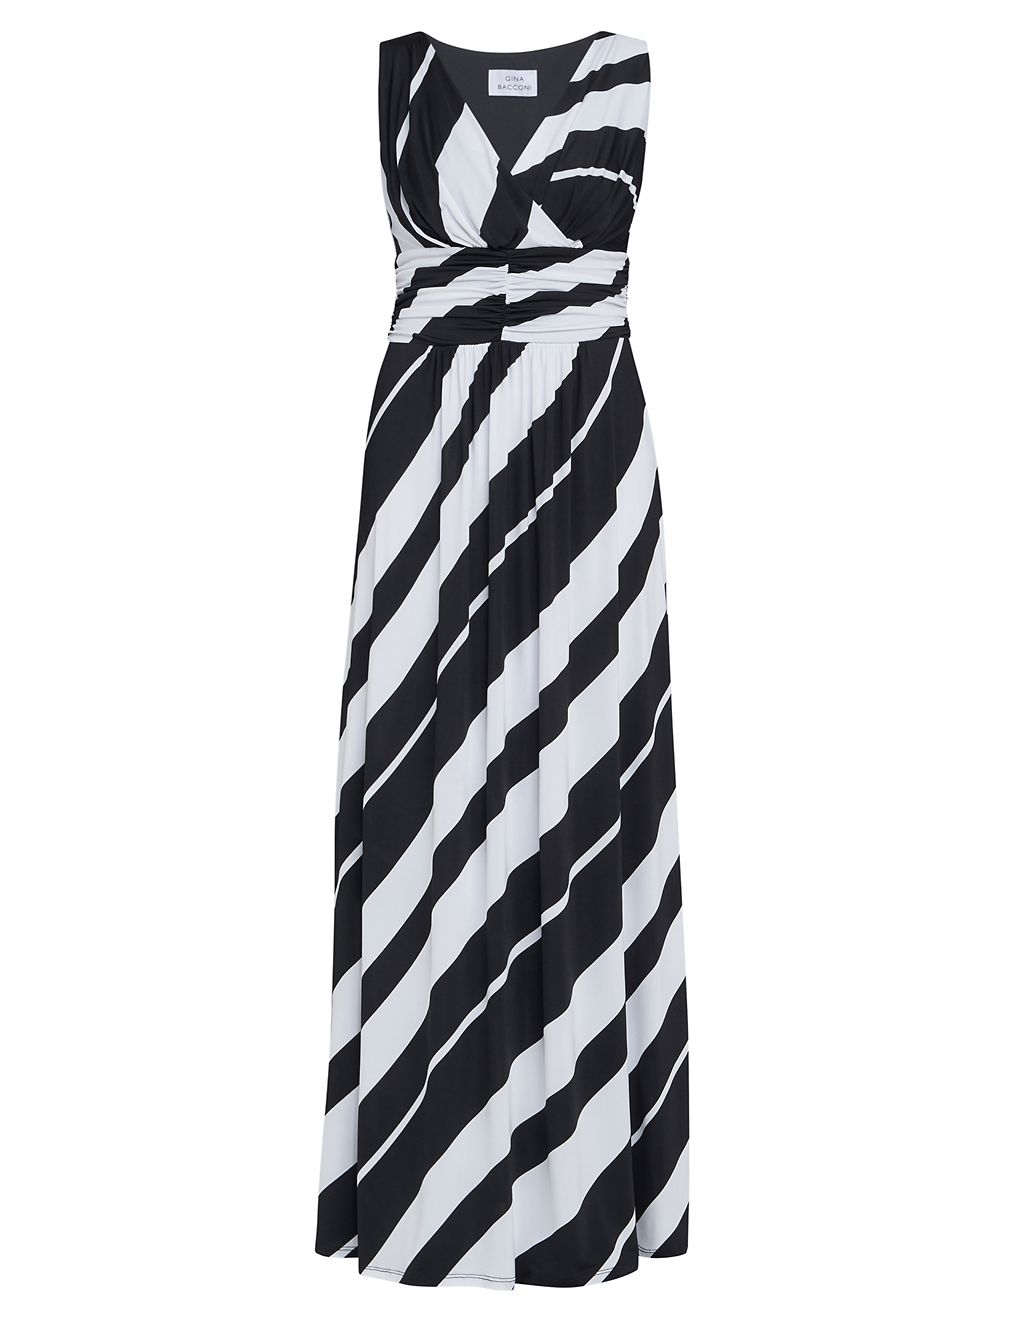 Jersey Striped V-Neck Maxi Waisted Dress | Gina Bacconi | M&S